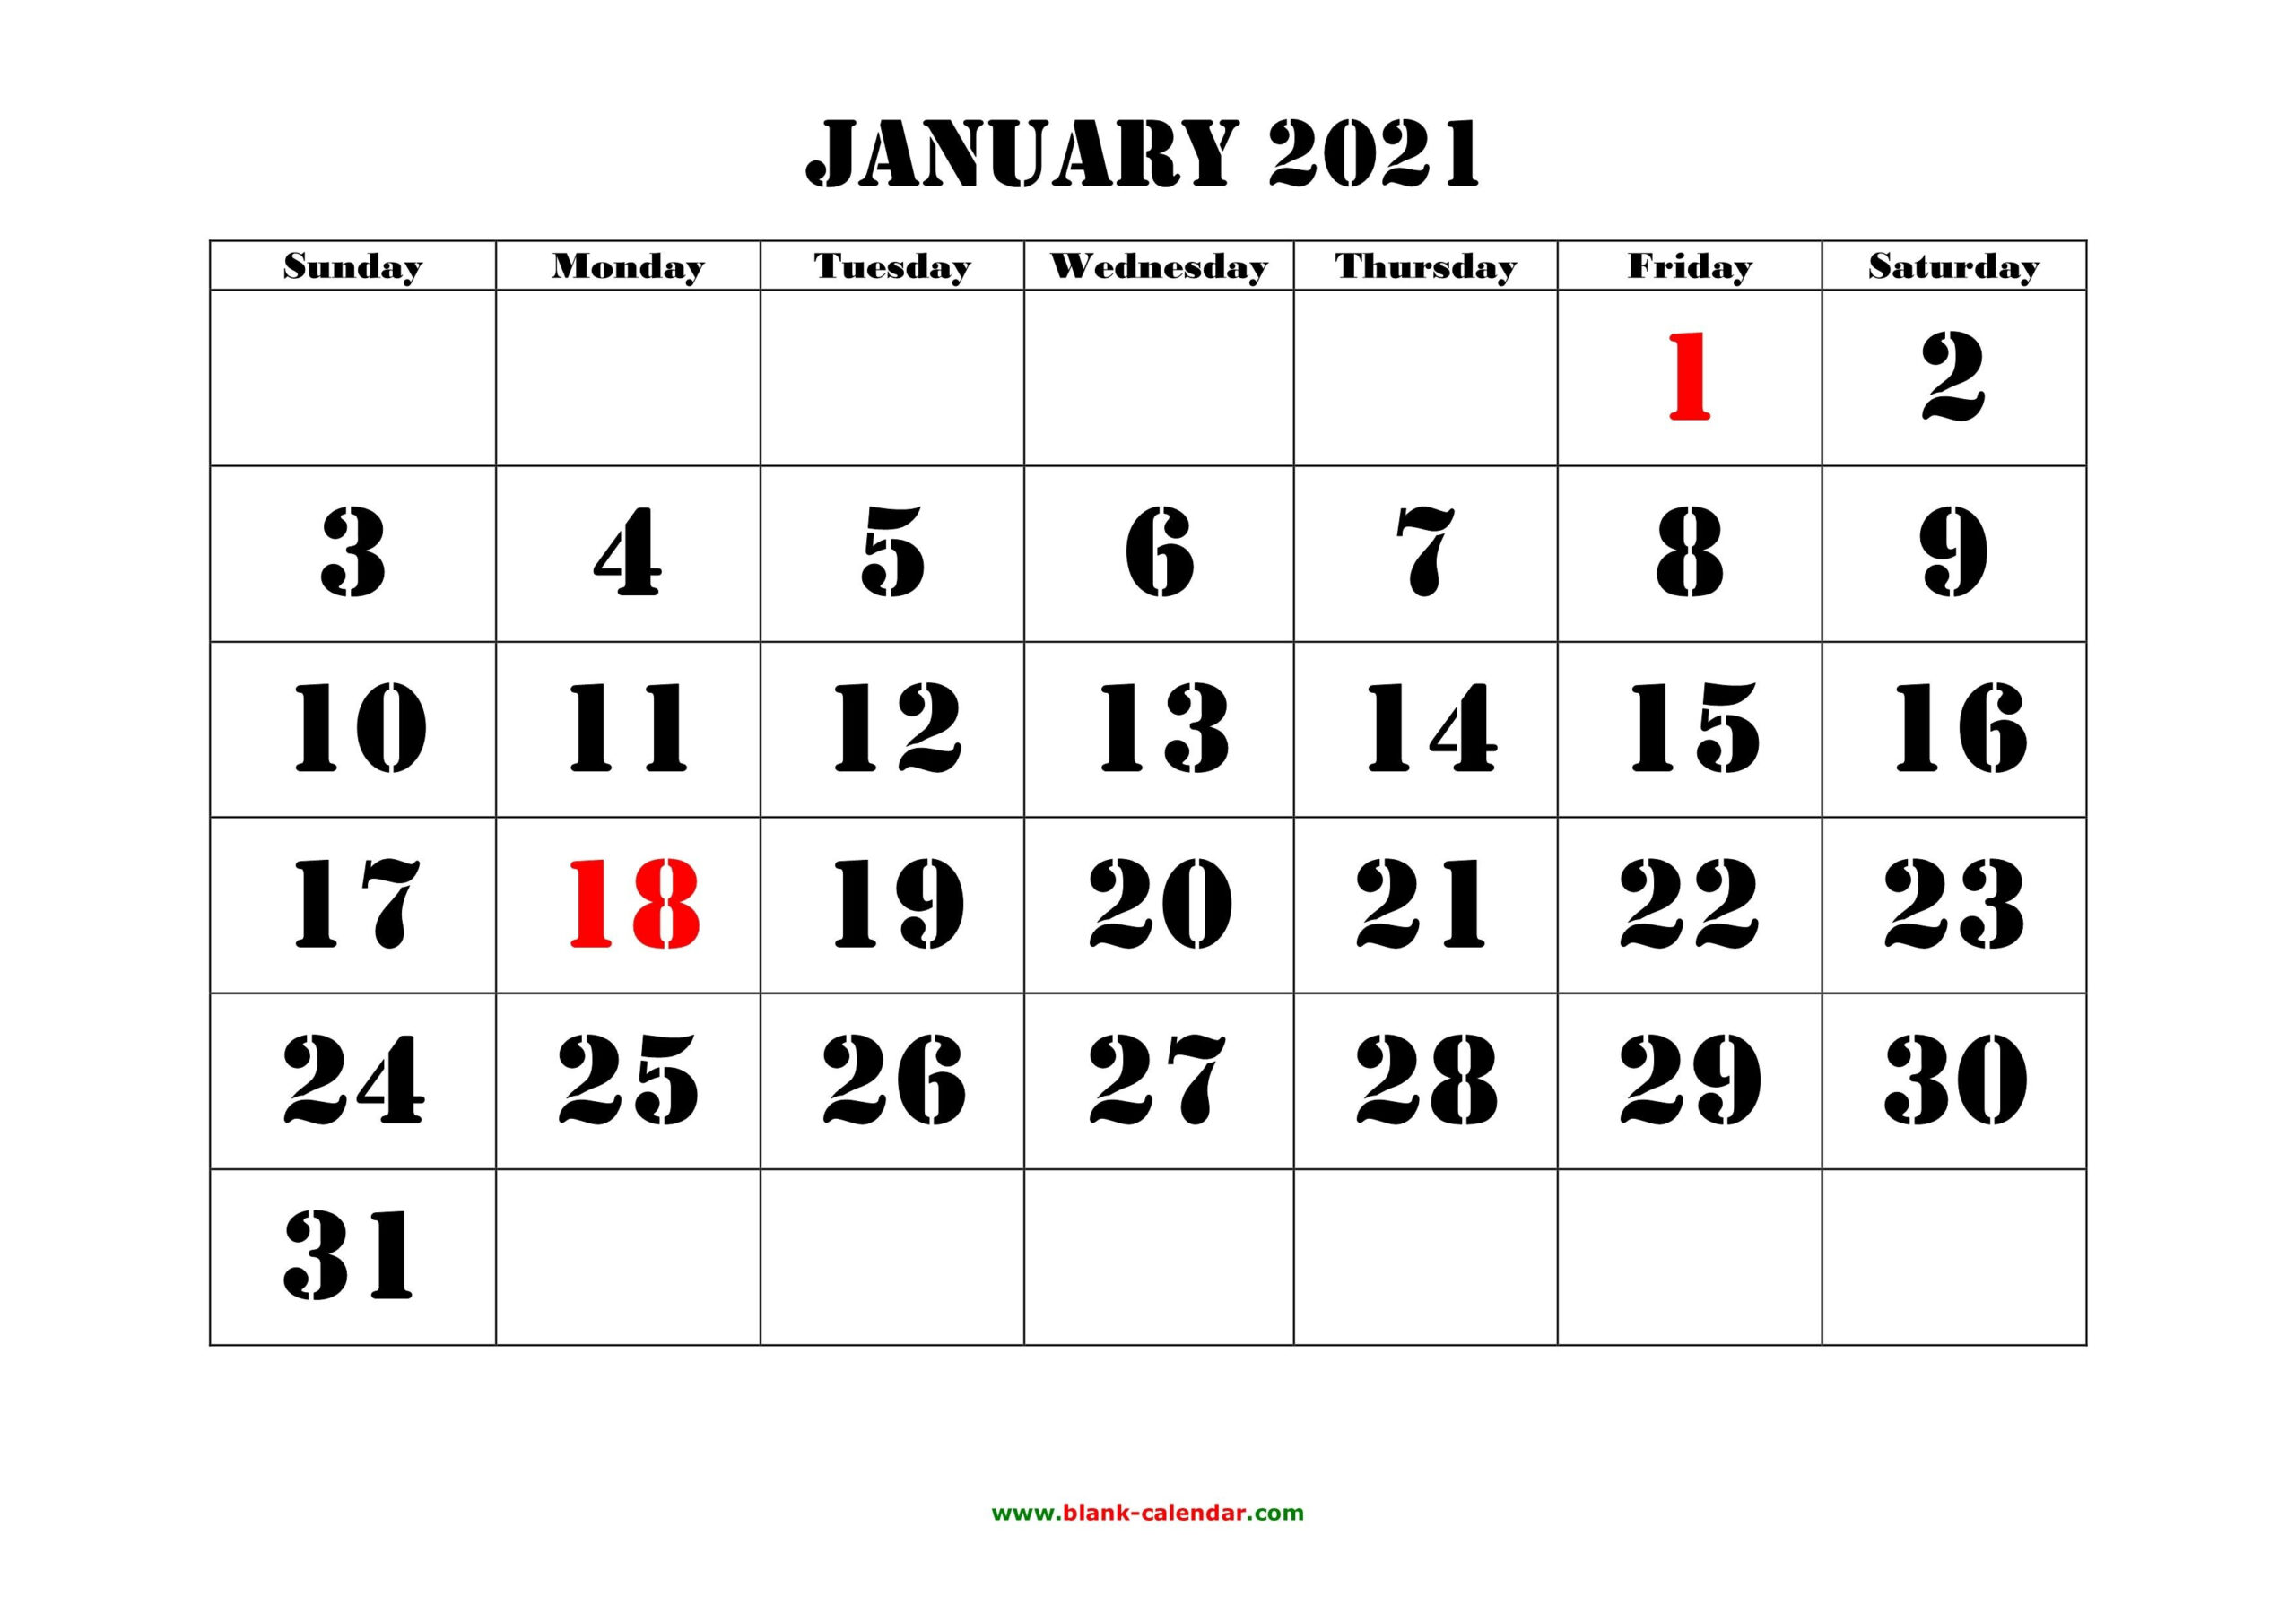 January 2021 Calendar - Free Download Printable Calendar